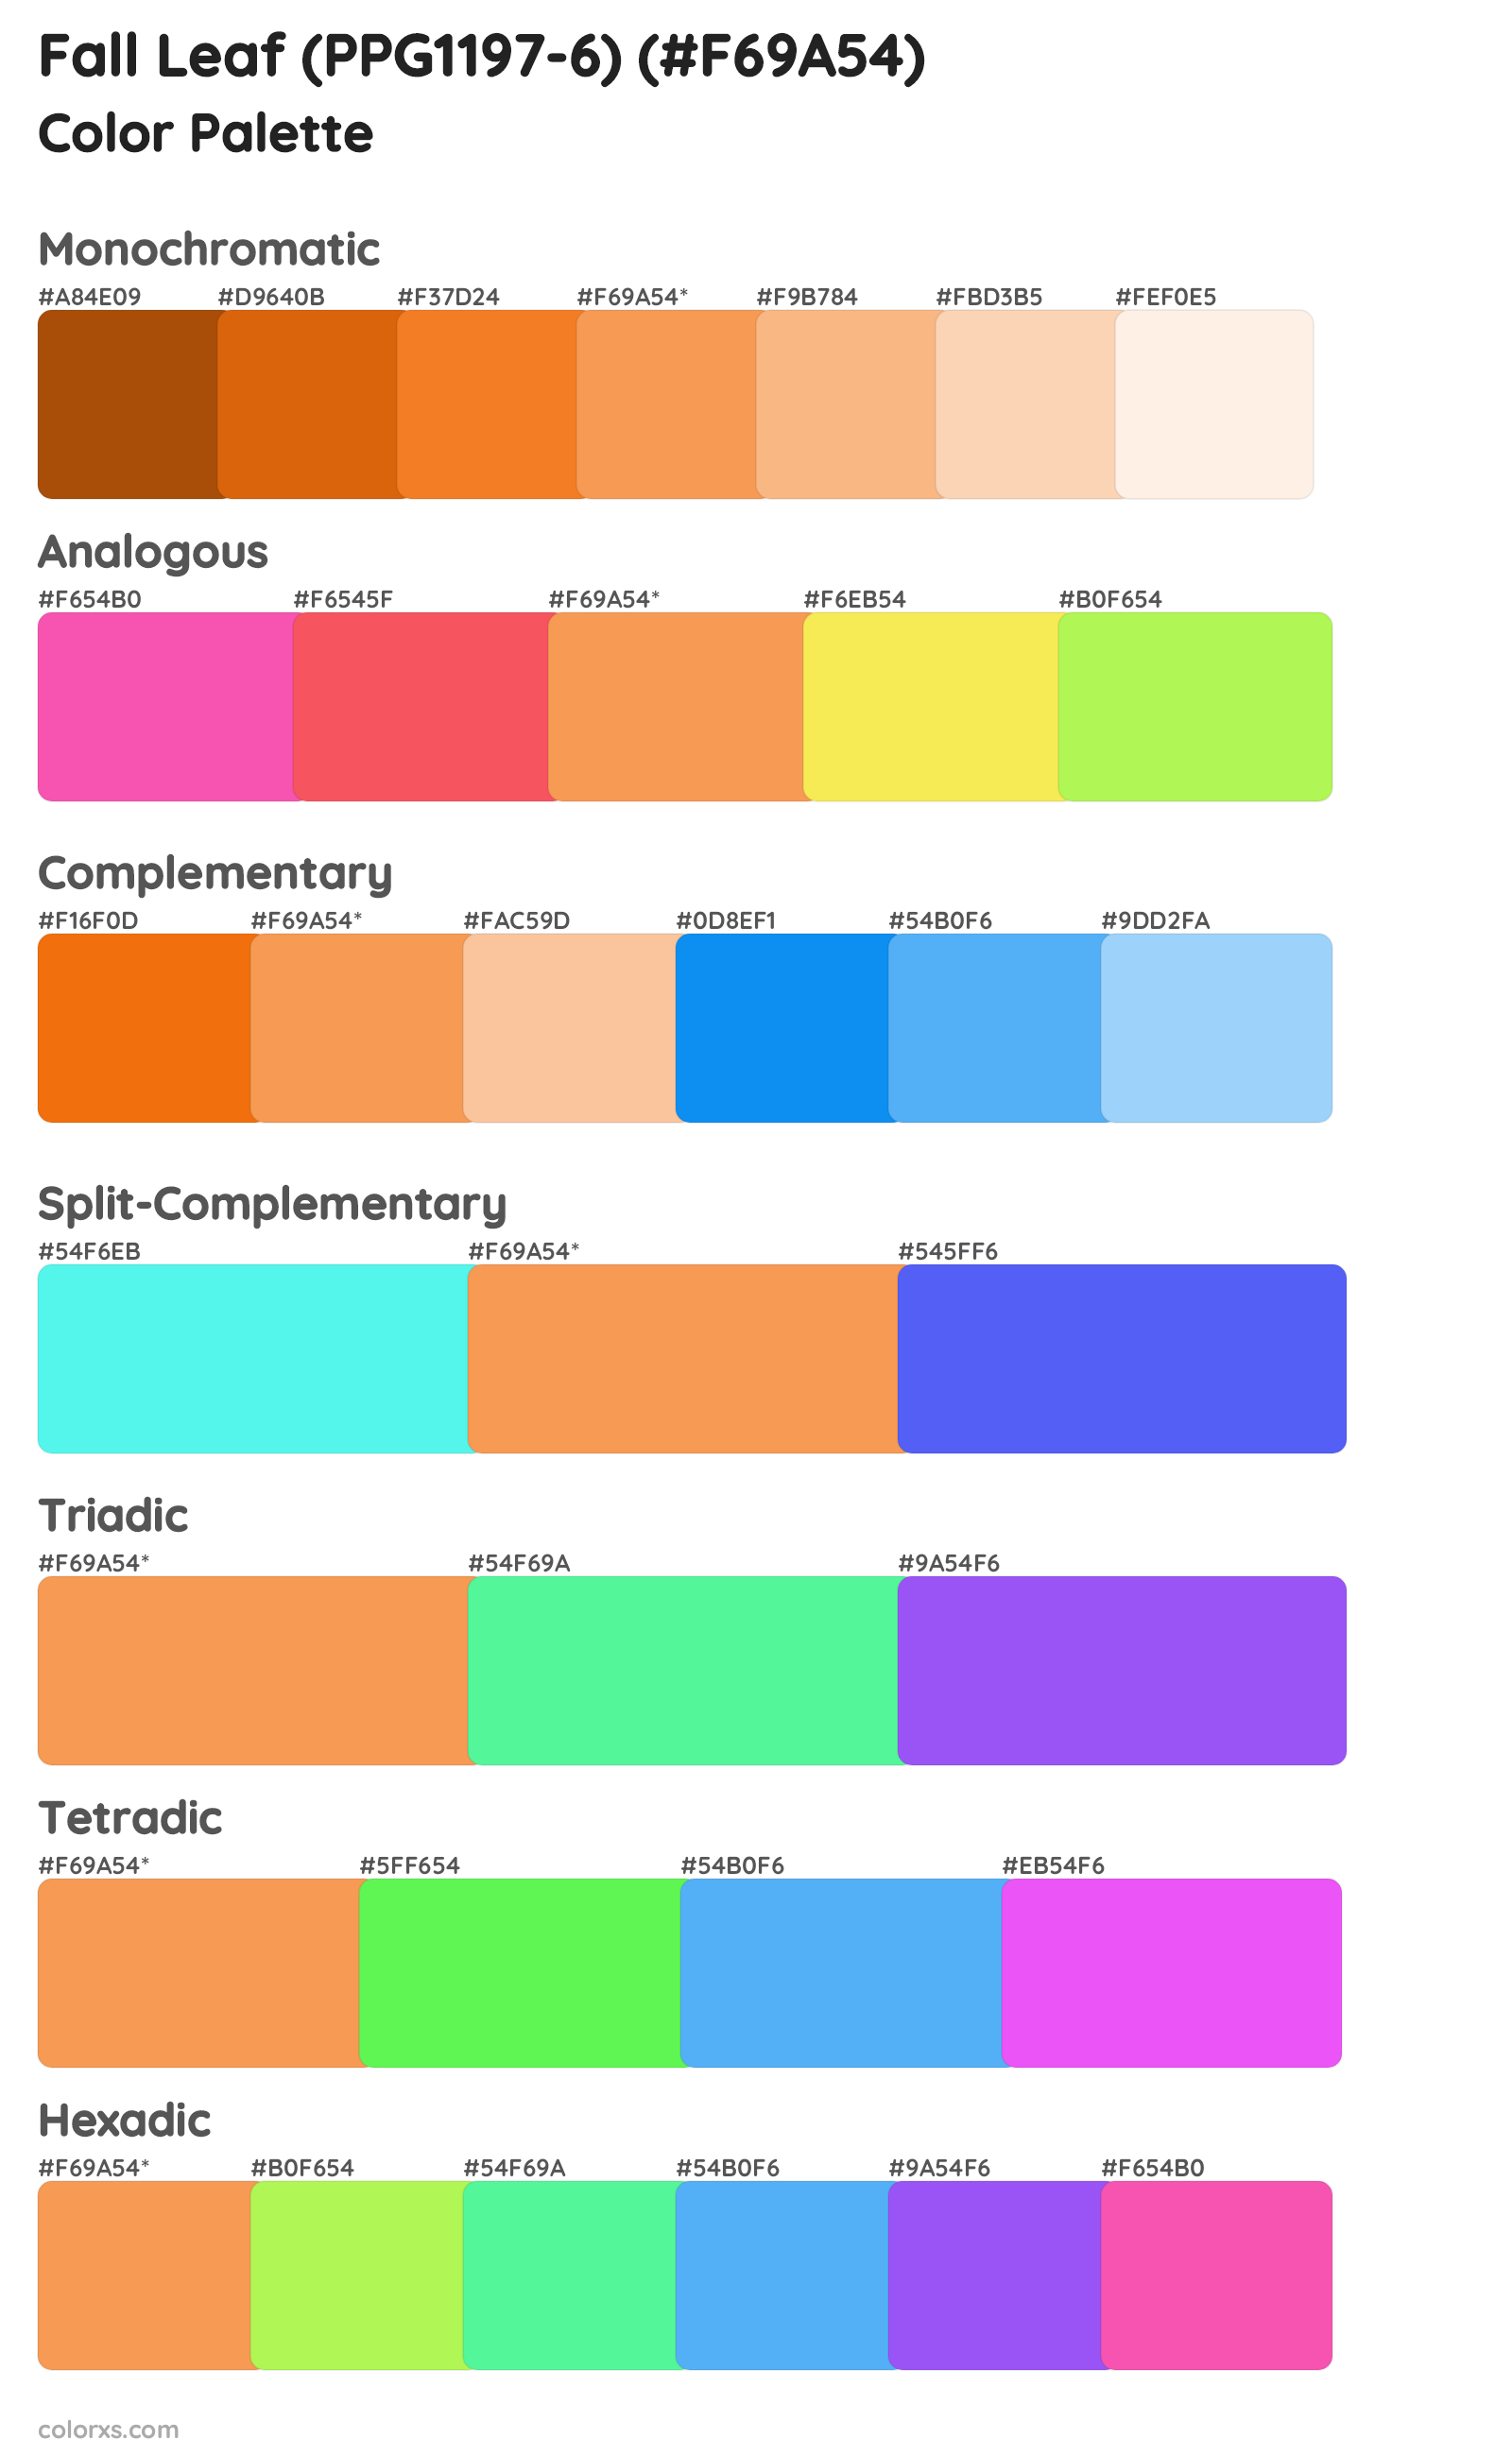 Fall Leaf (PPG1197-6) Color Scheme Palettes